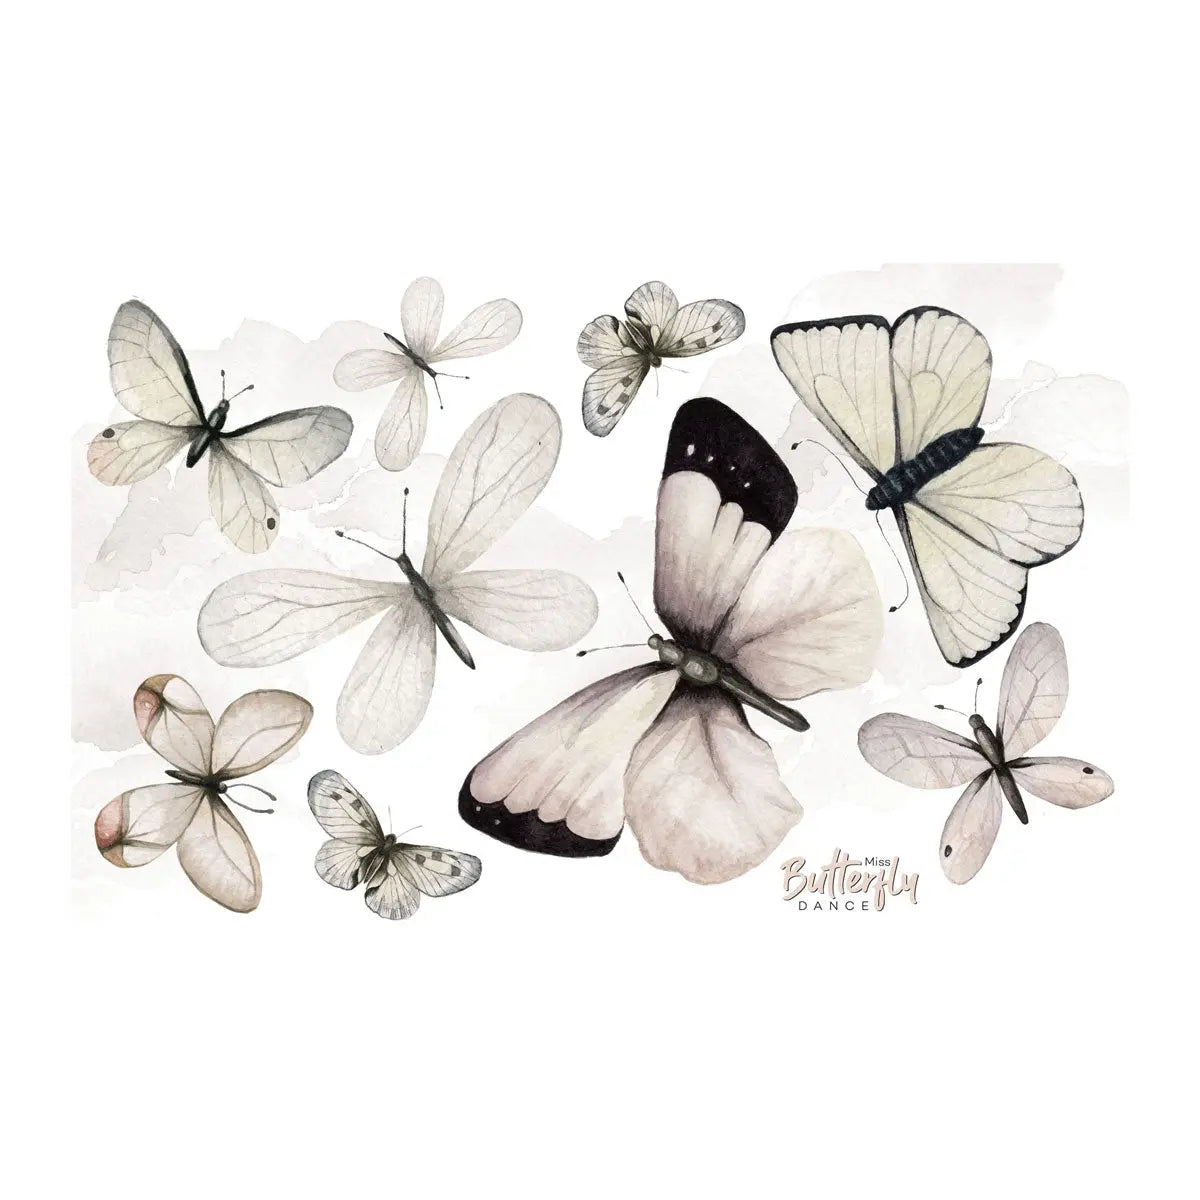 Stickers "butterflies"-Wallpapers & stickers-Dekornik-Blue Almonds-London-South Kensington